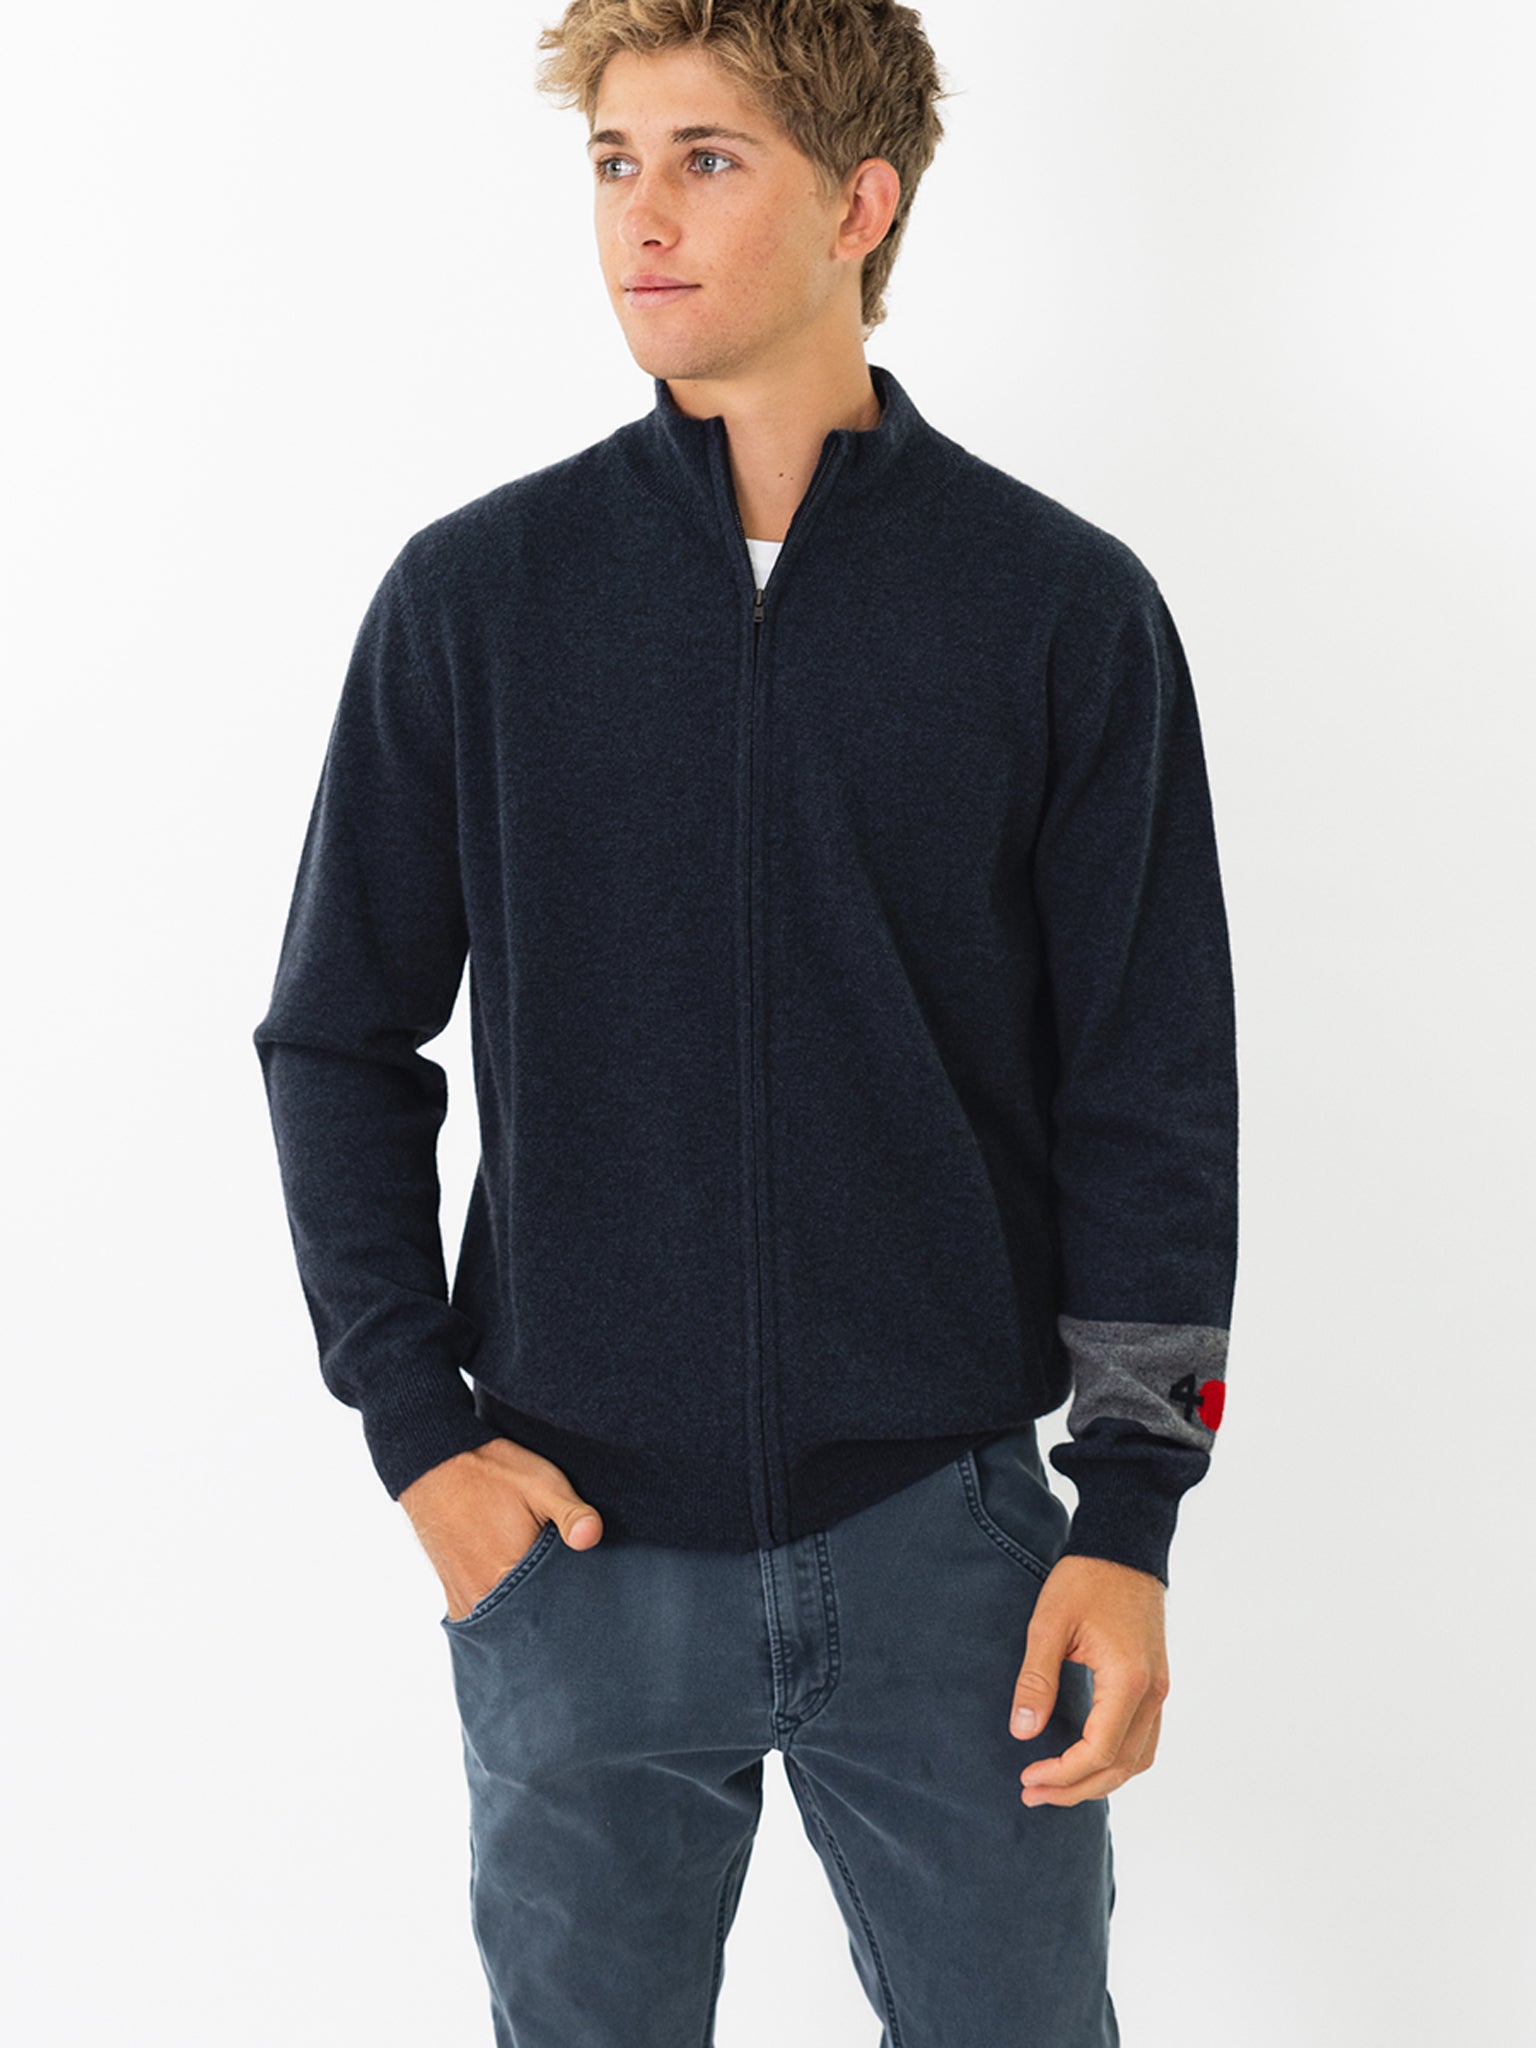 Men Cashmere Cardigan Sweater